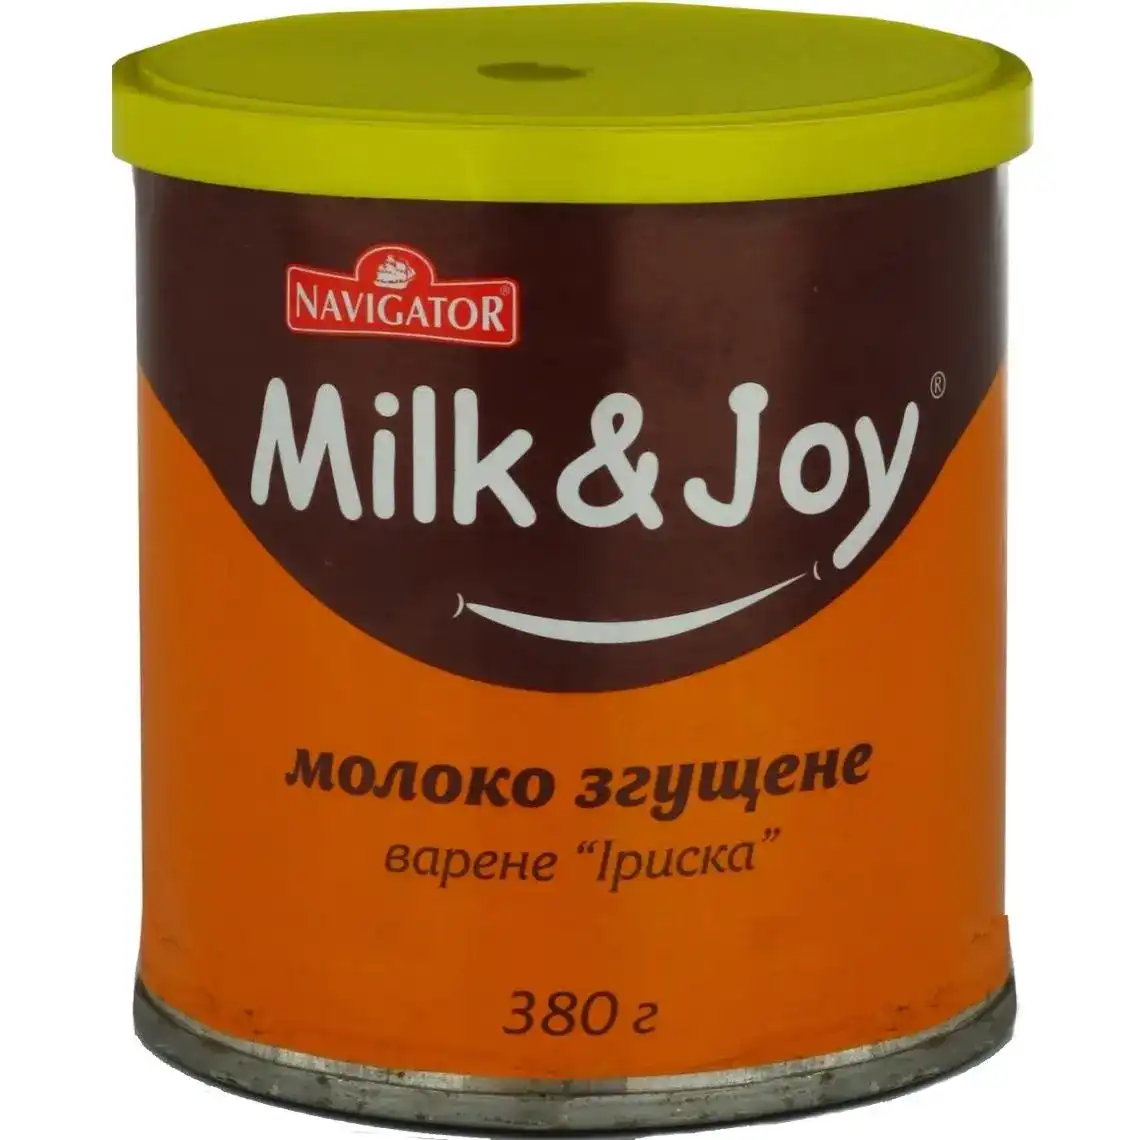 Молоко згущене Navigator Milk&Joy Іриска ГОСТ 8.5% 370 г